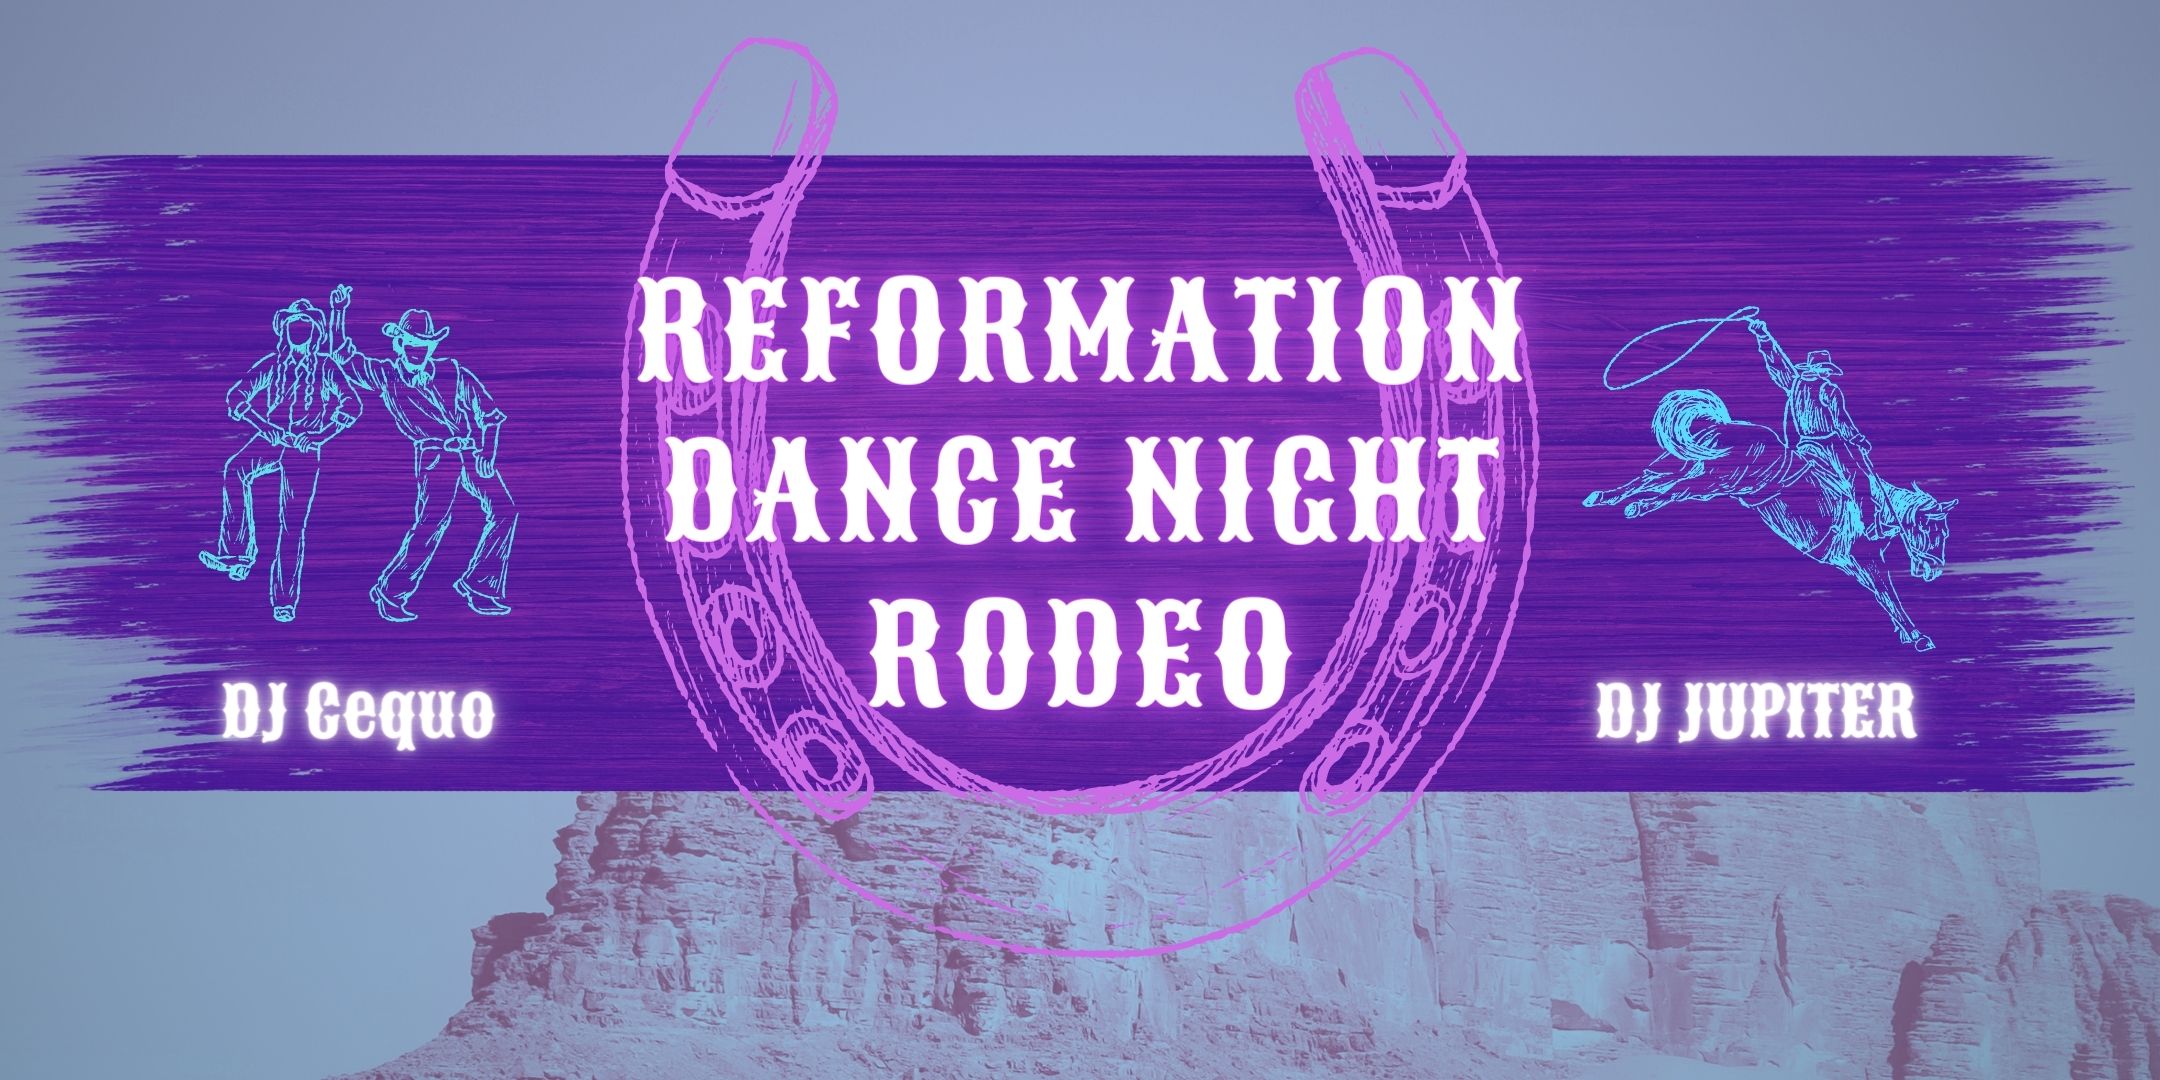 Reformation Dance Night presents: Reformation Rodeo : DJ Jupiter & DJ Cequo Friday, July 26 James Ballentine “Uptown” VFW Post 246 Doors 10:00pm :: Music 10pm :: 21+ GA $10 ADV / $15 DOS Tickets On Sale Now